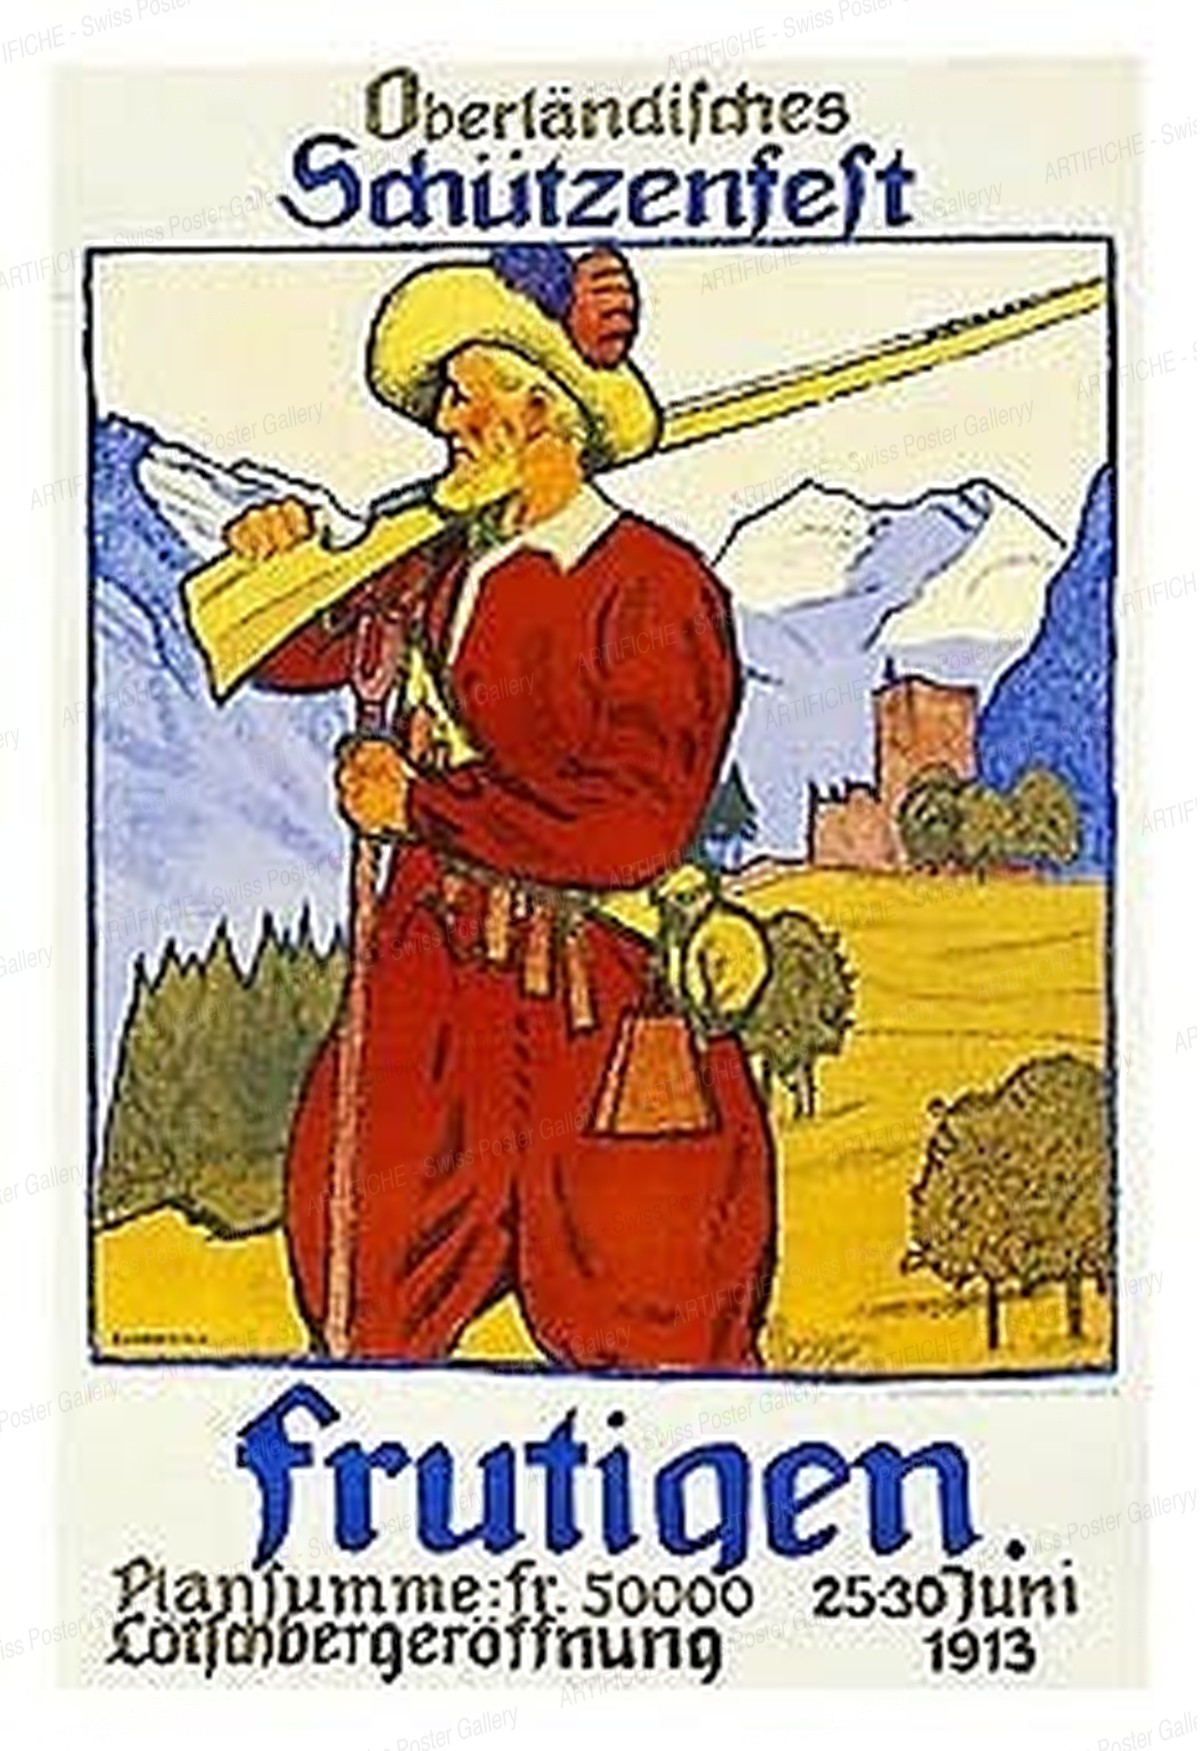 Shooting competition Frutigen 1913, Emil Cardinaux